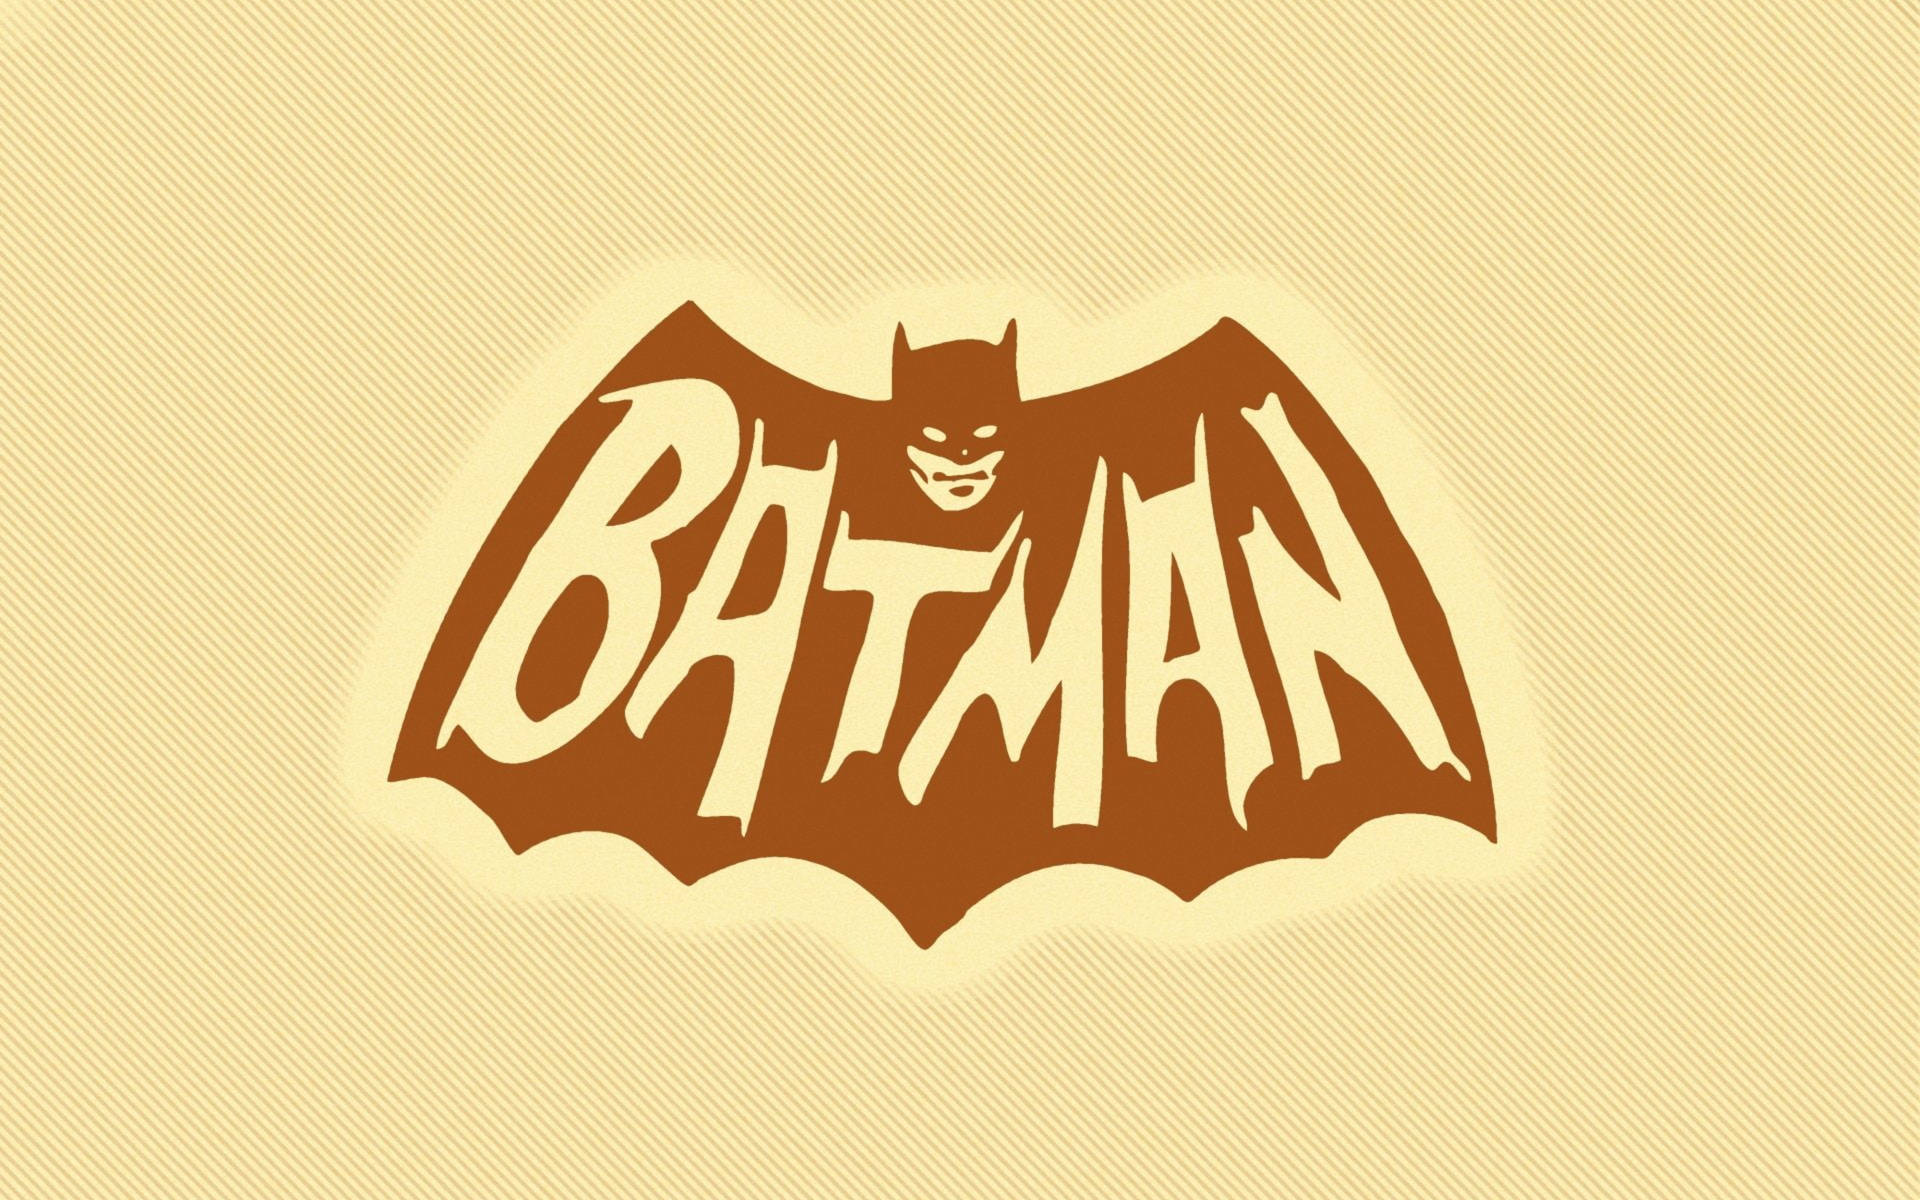 Digital Art Batman Logo Wallpaper